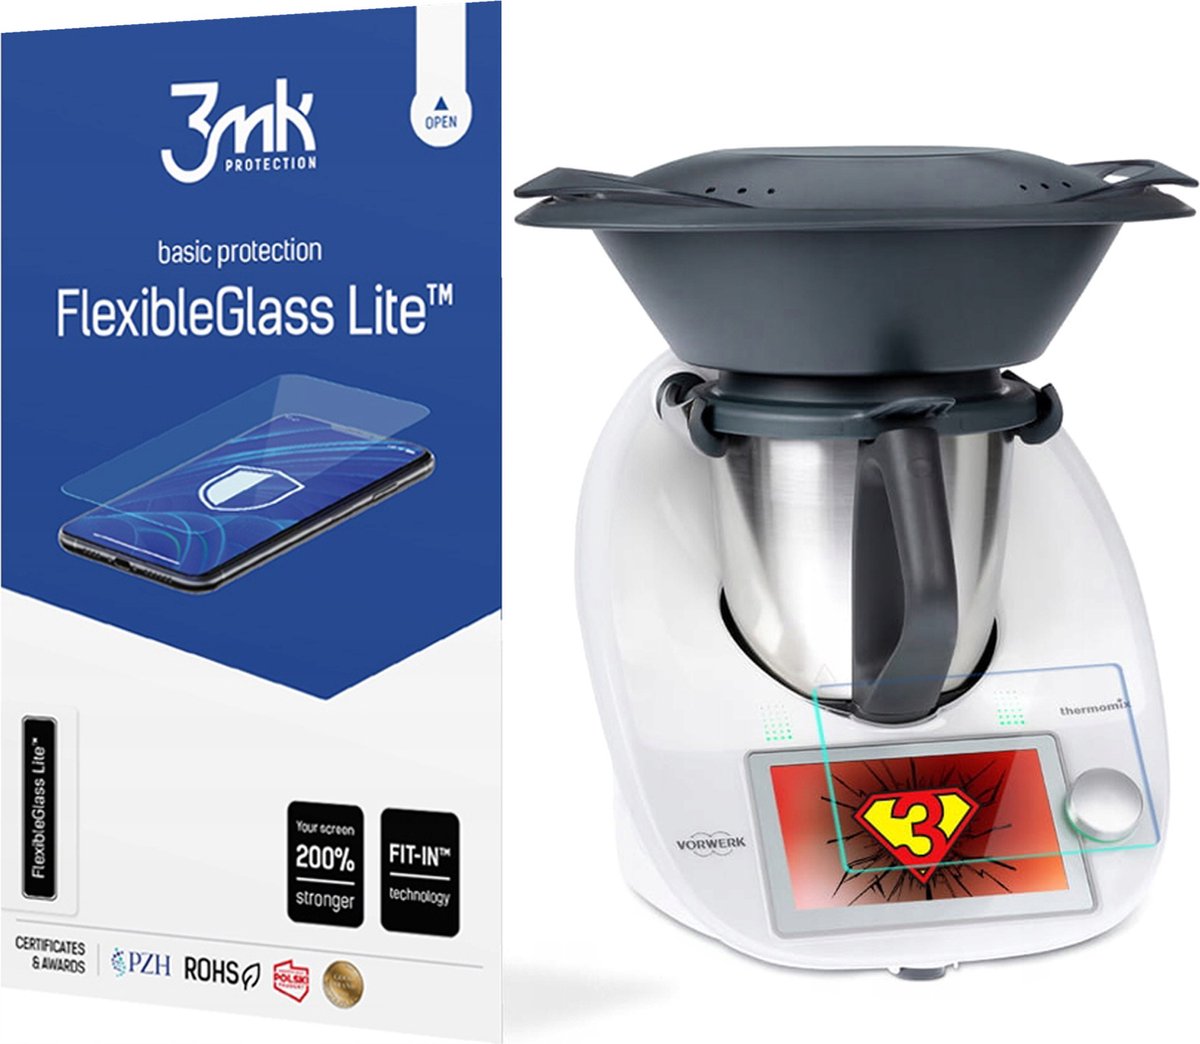 Onbreekbaar Hybride Glas voor Thermomix TM6 - 3mk FlexibleGlass Lite